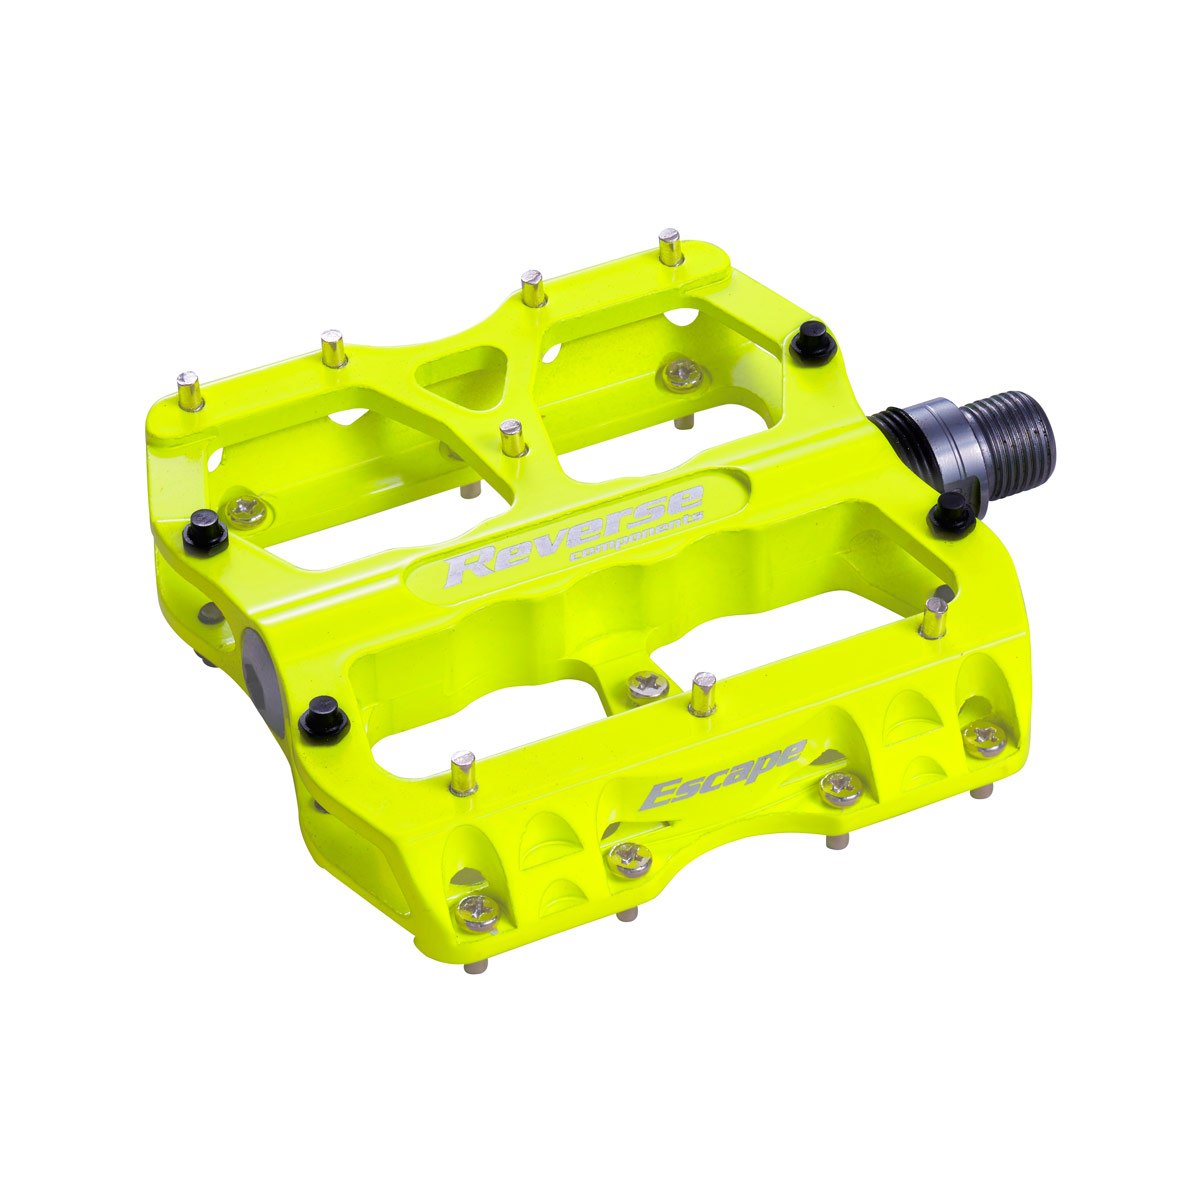 Produktbild von Reverse Components Escape Pedal - neon gelb